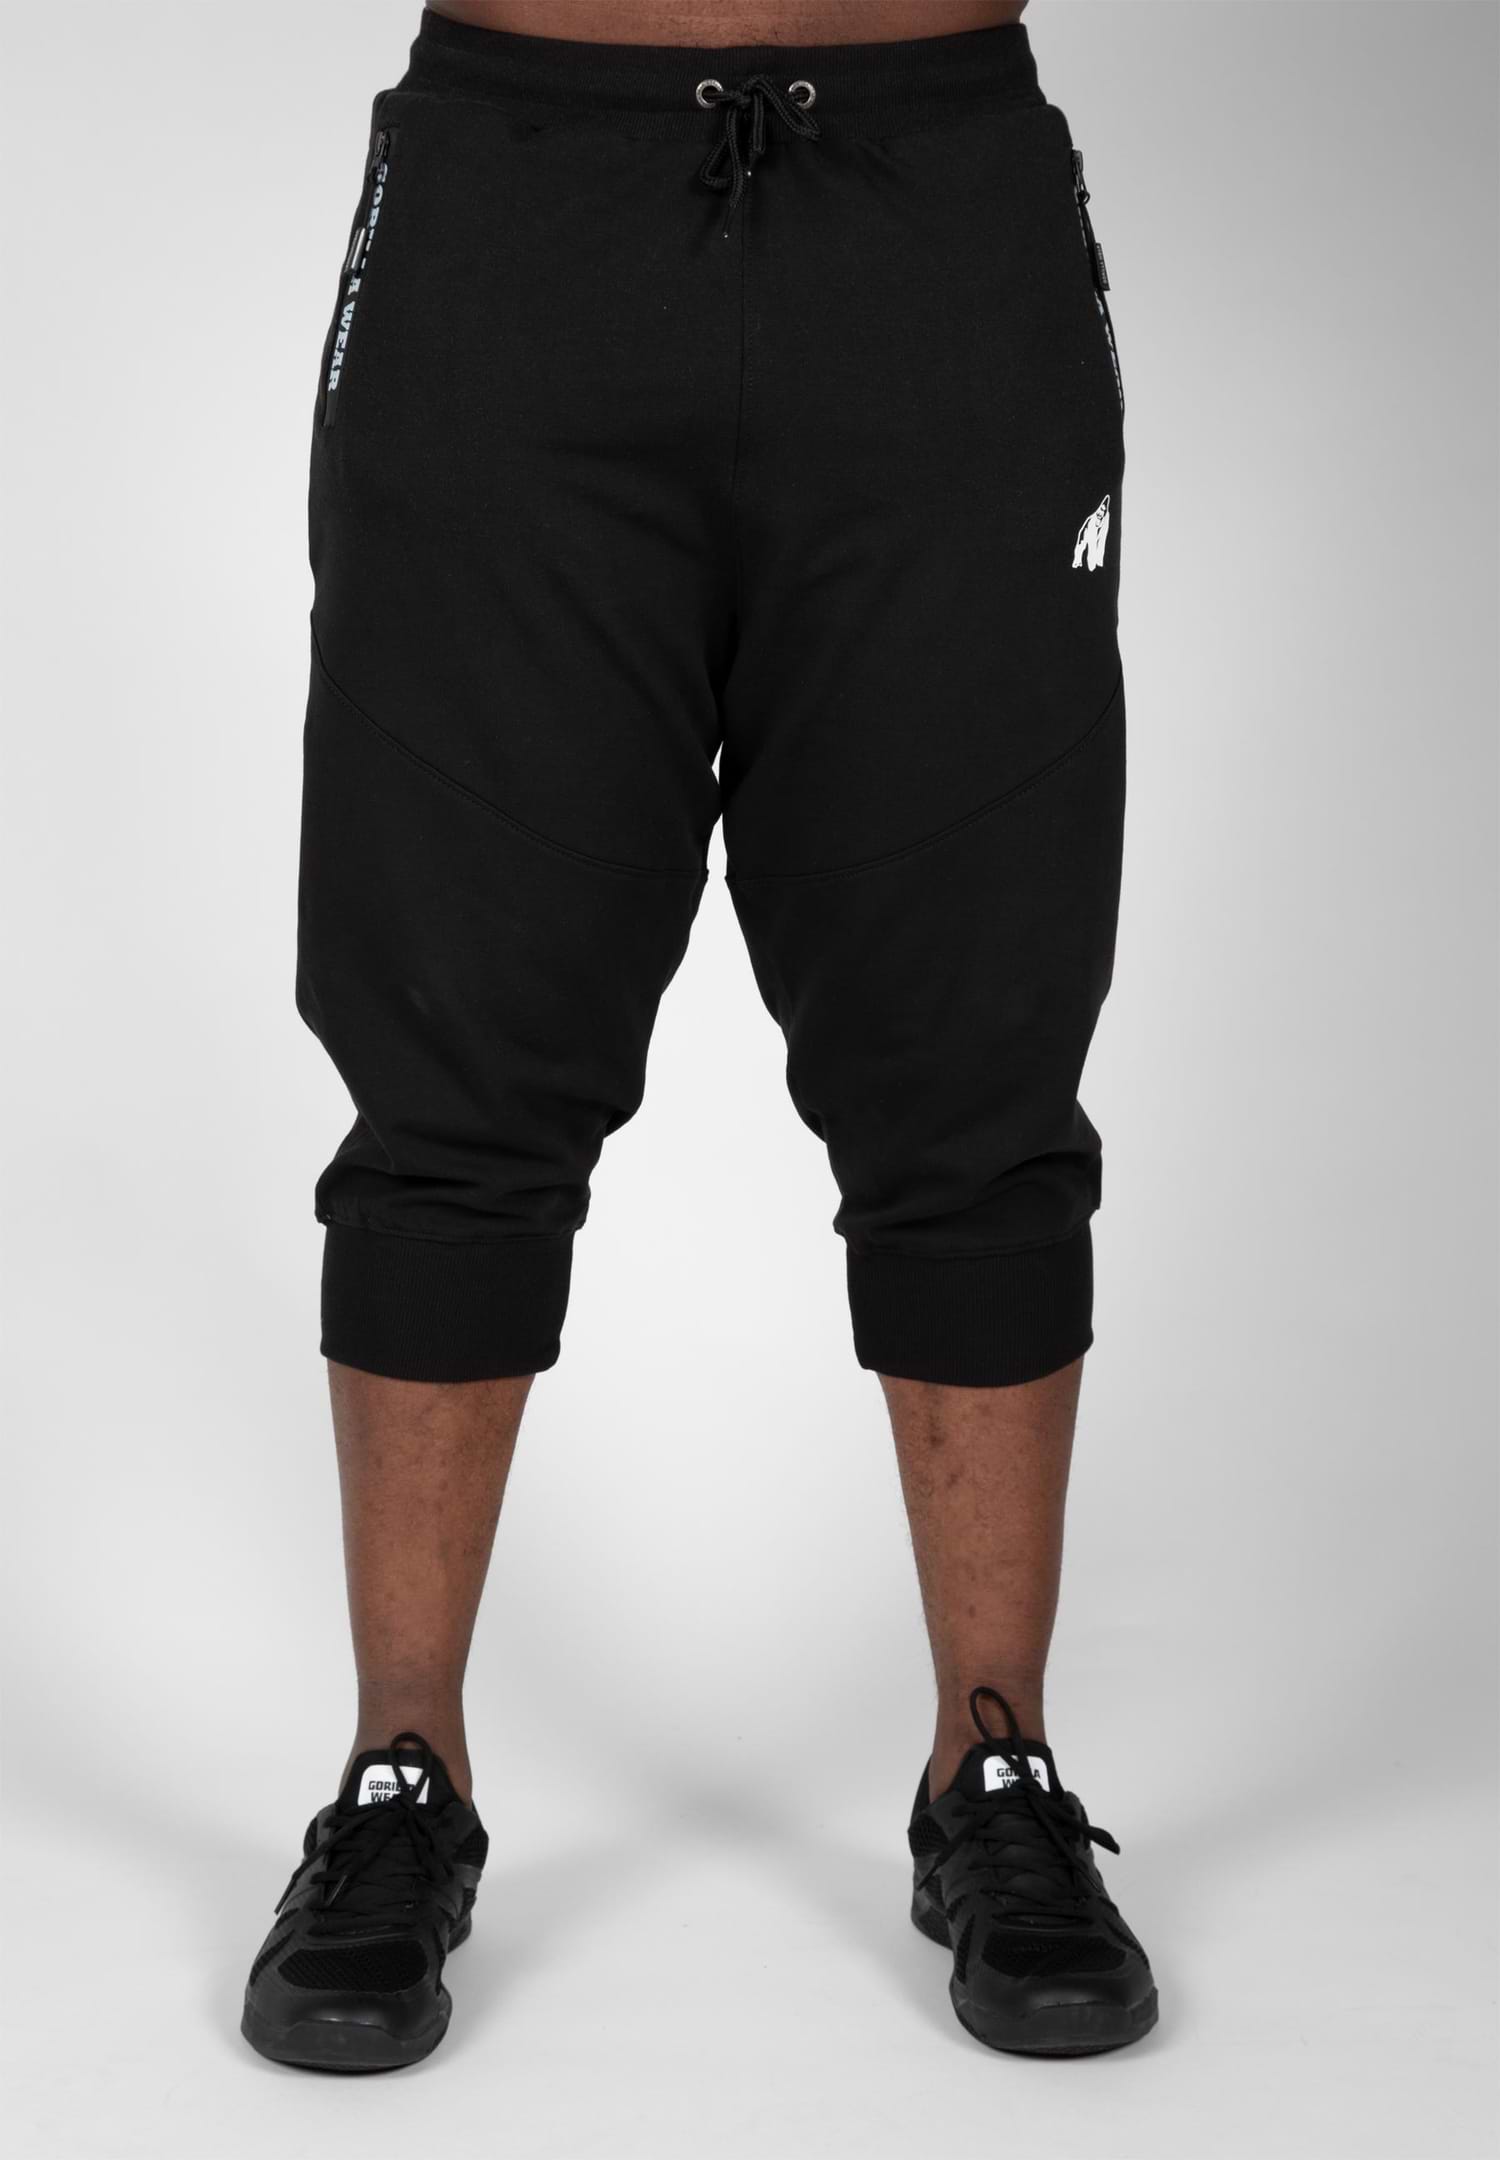 Nike Air Mens Full Tracksuit Fleece Set Zip Up Hoodie Joggers Sweatpants  Blk 4XL